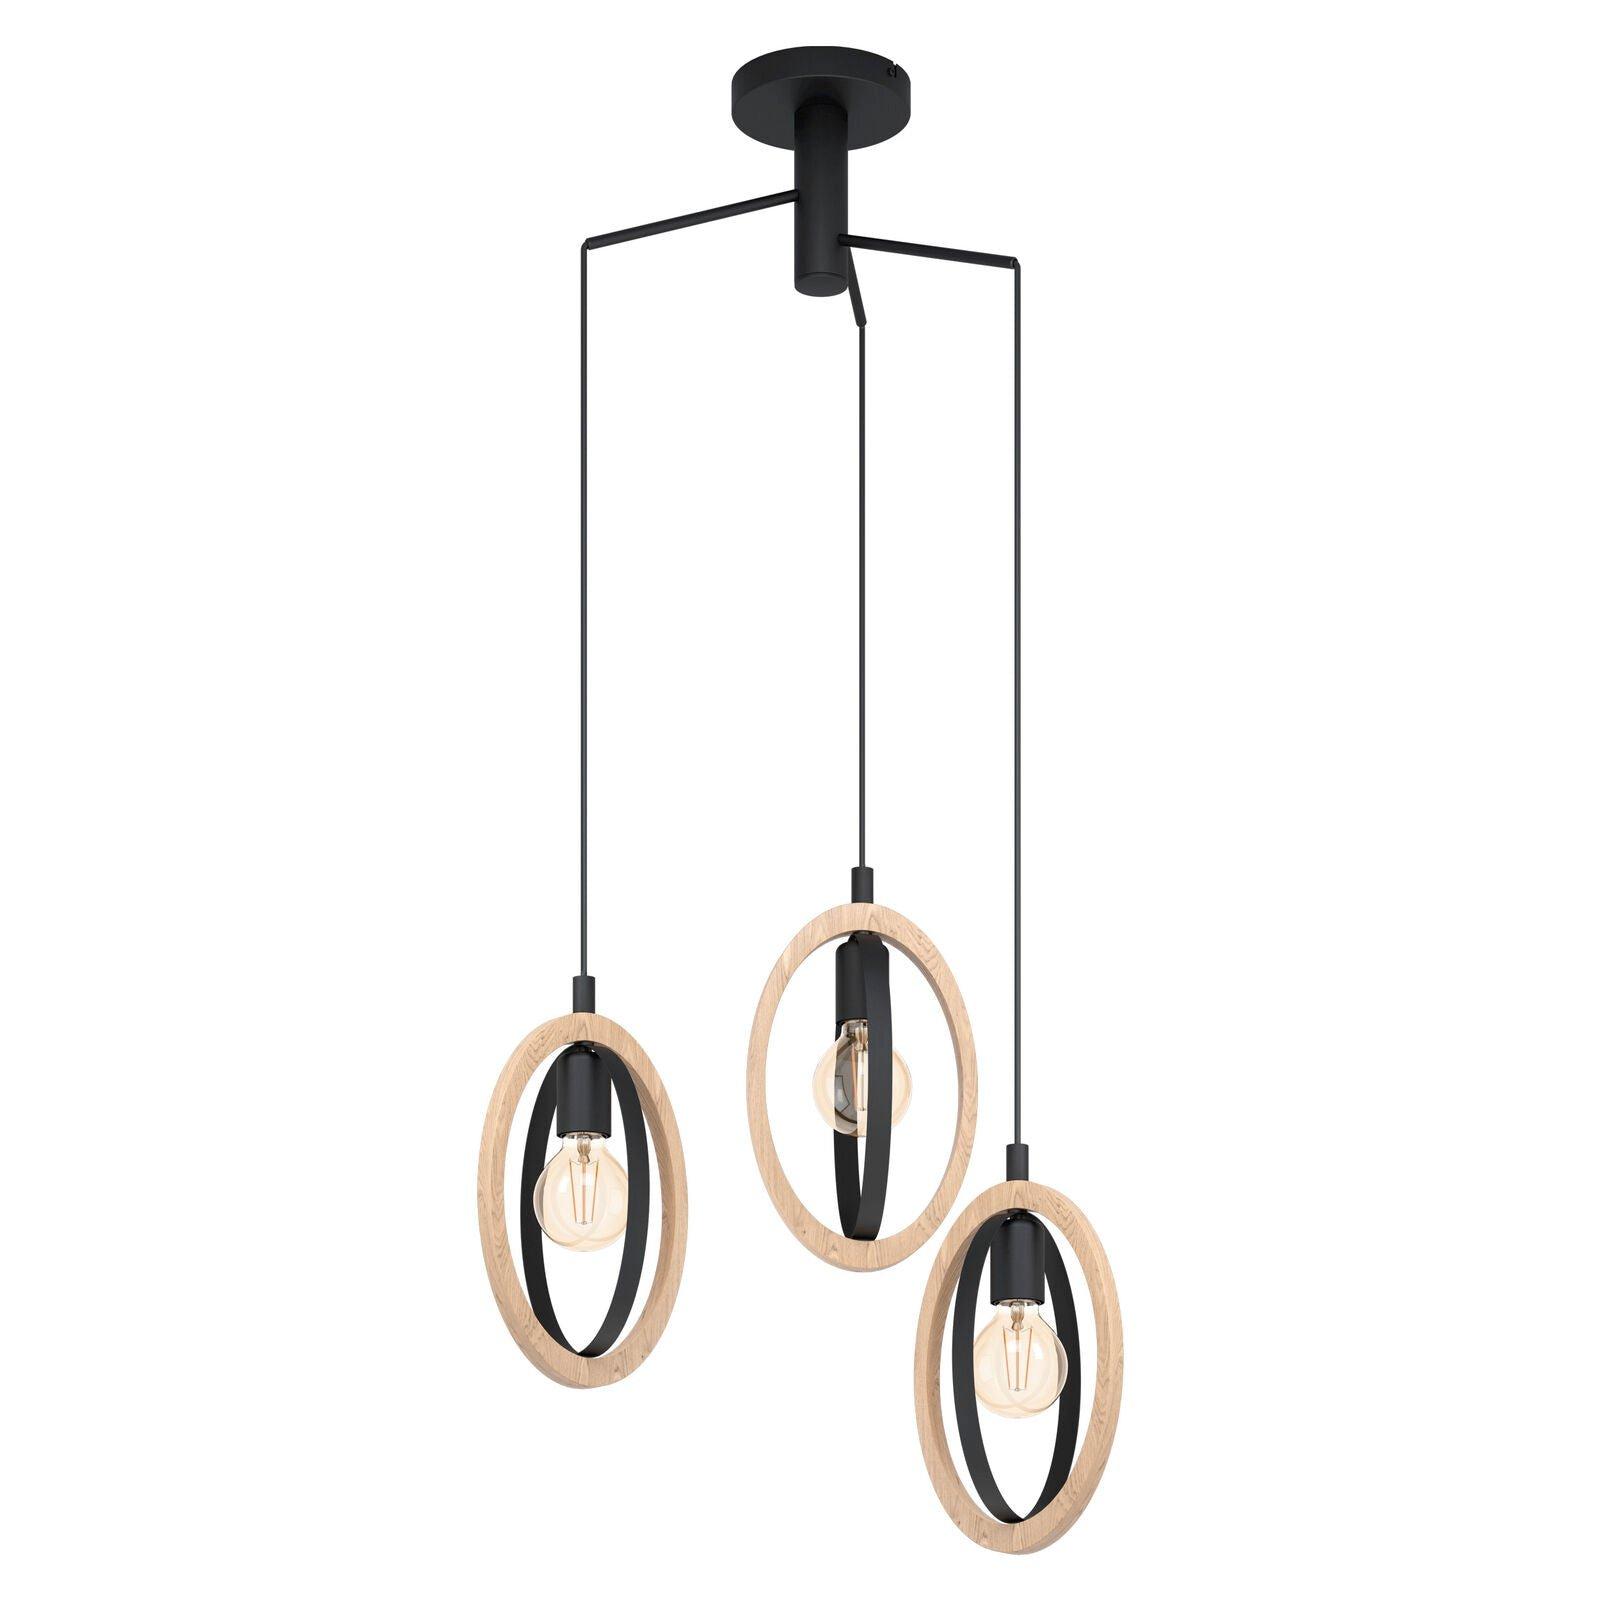 Hanging Ceiling Pendant Light Black & Wood Hoop Shade 3x 40W E27 Bulb